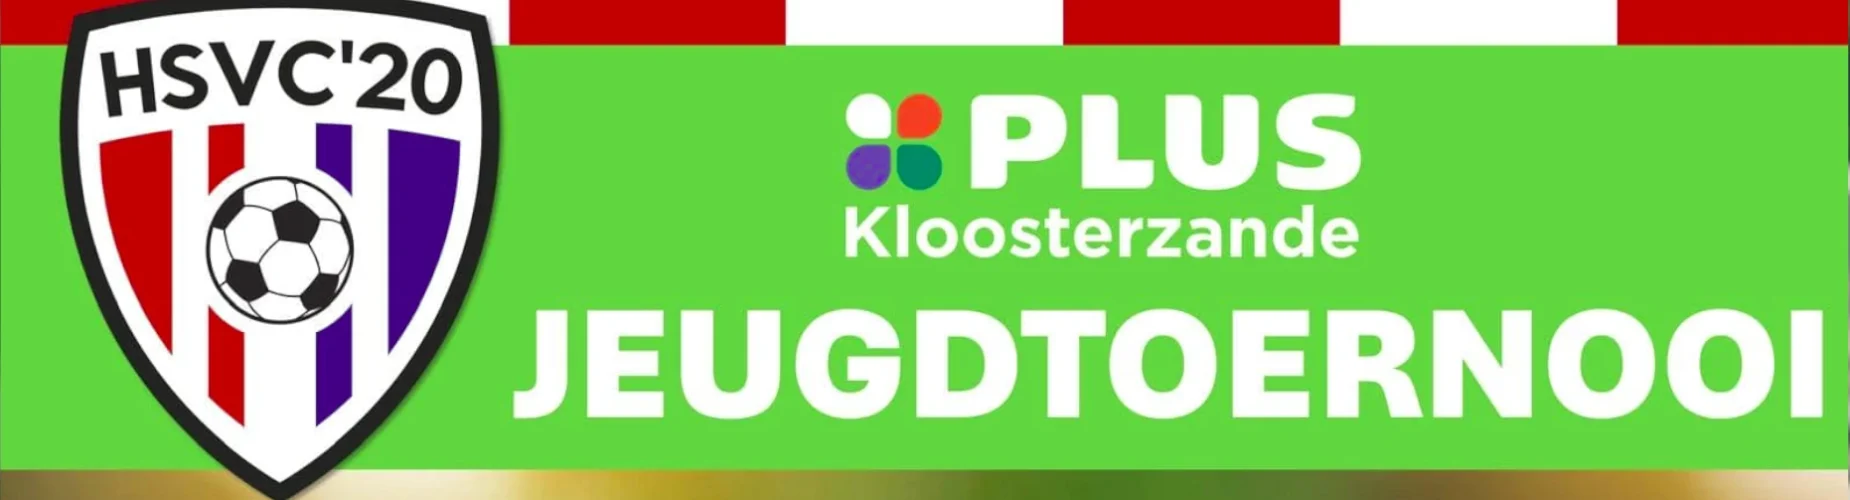 Banner - Plus Jeugdtoernooi - HSVC ’20 - Kloosterzande